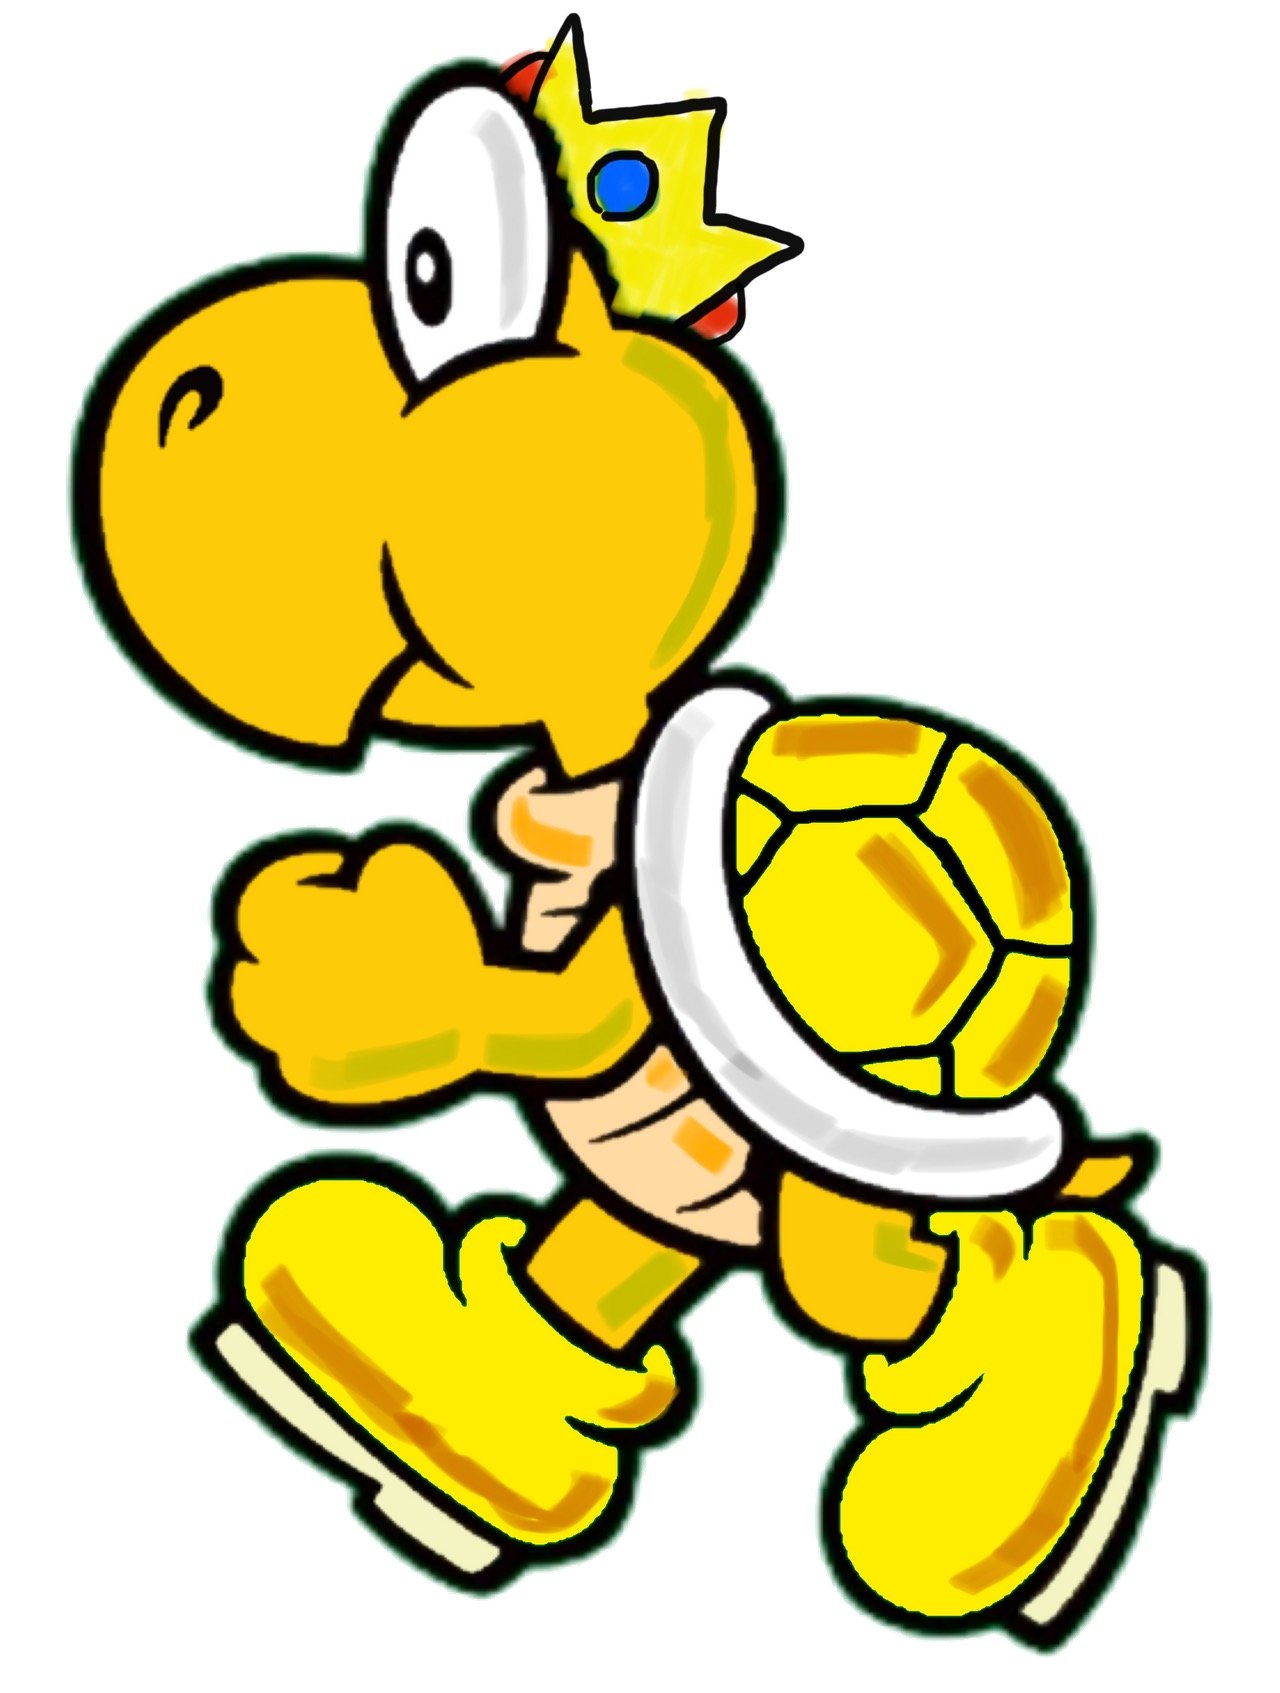 Koopalings - Super Mario Wiki, the Mario encyclopedia